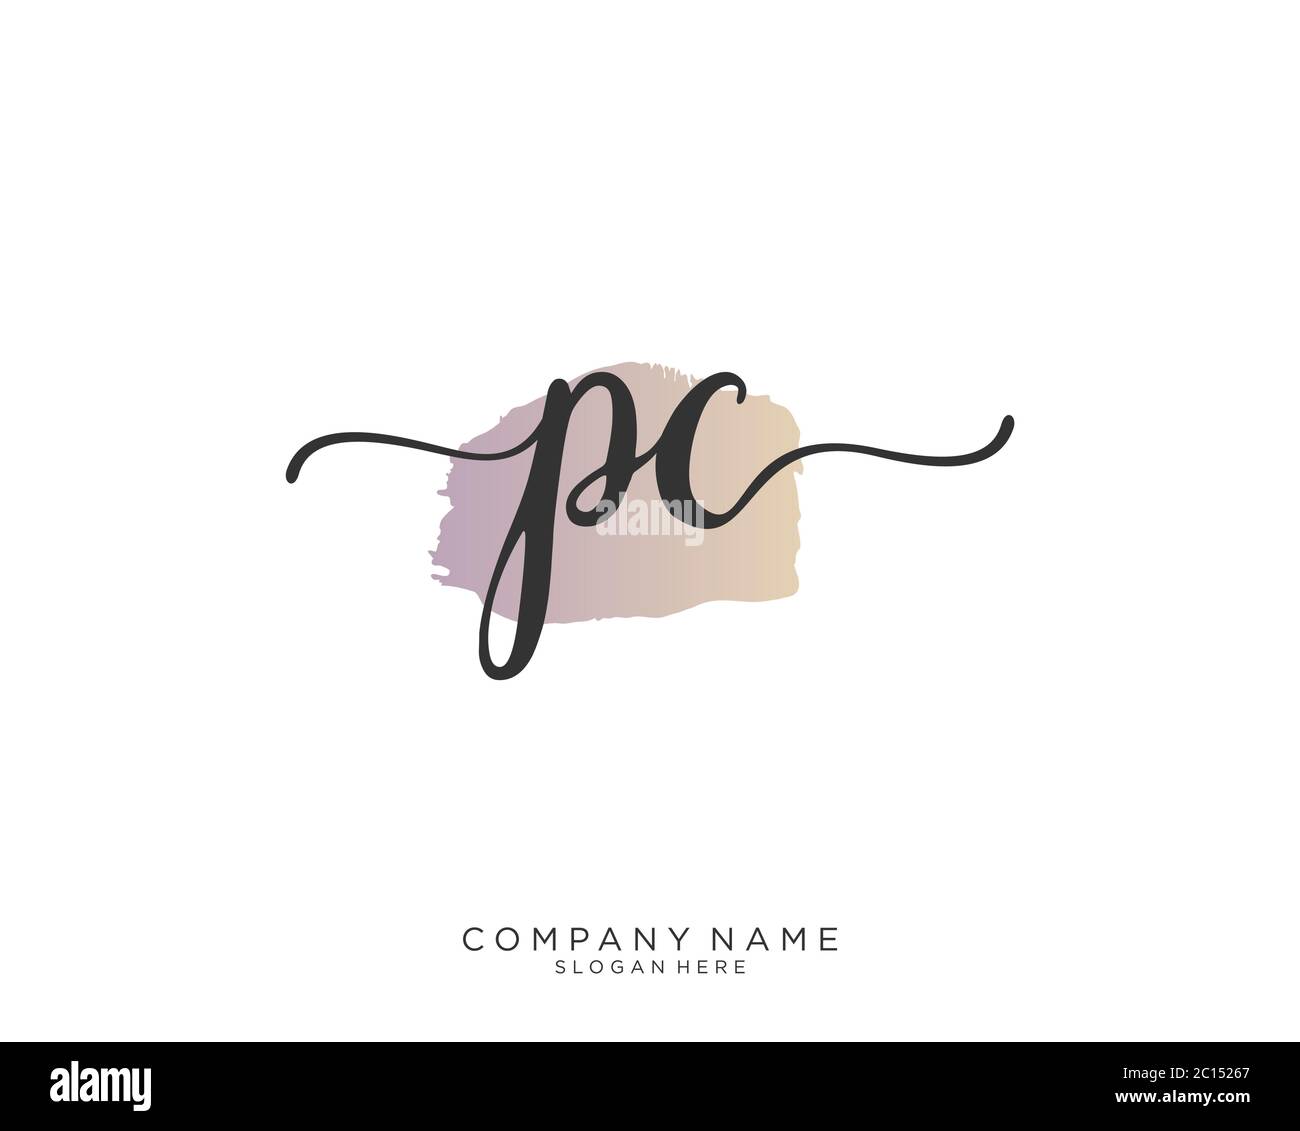 PC Initial handwriting logo vector Stock Vector